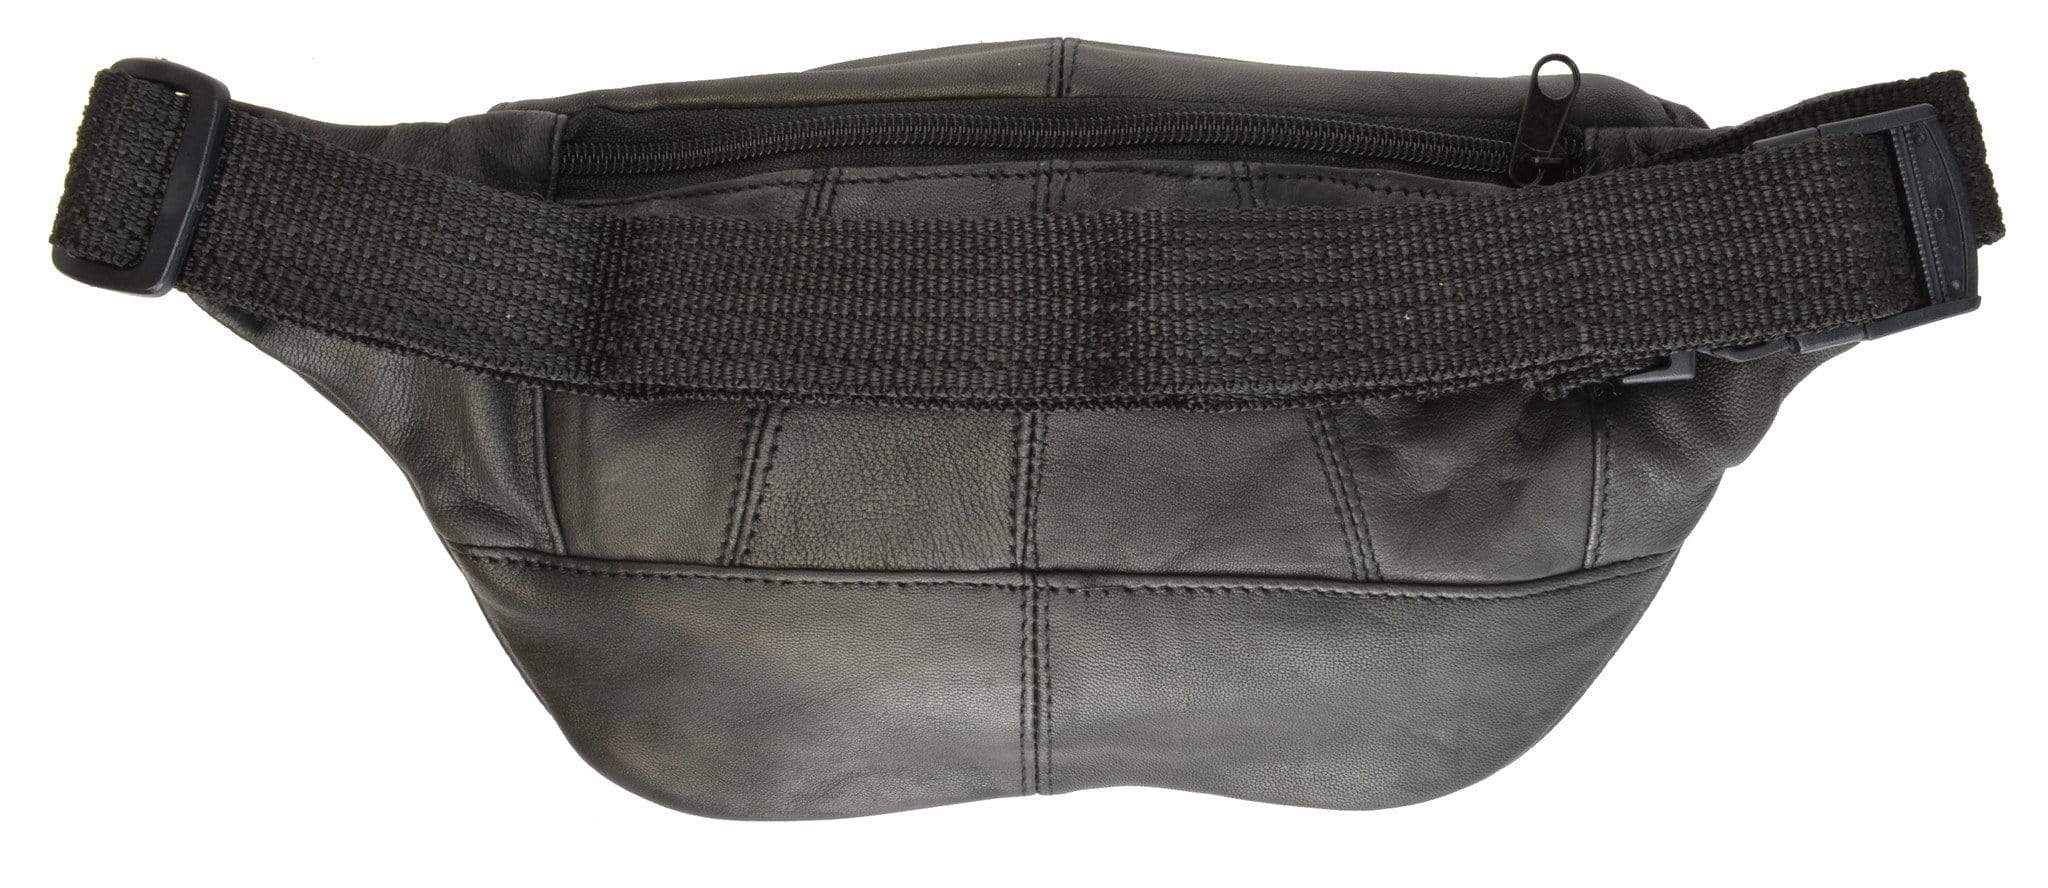 Black Belt Bag Pouch for Men Women Leather Phone Waist Purse 